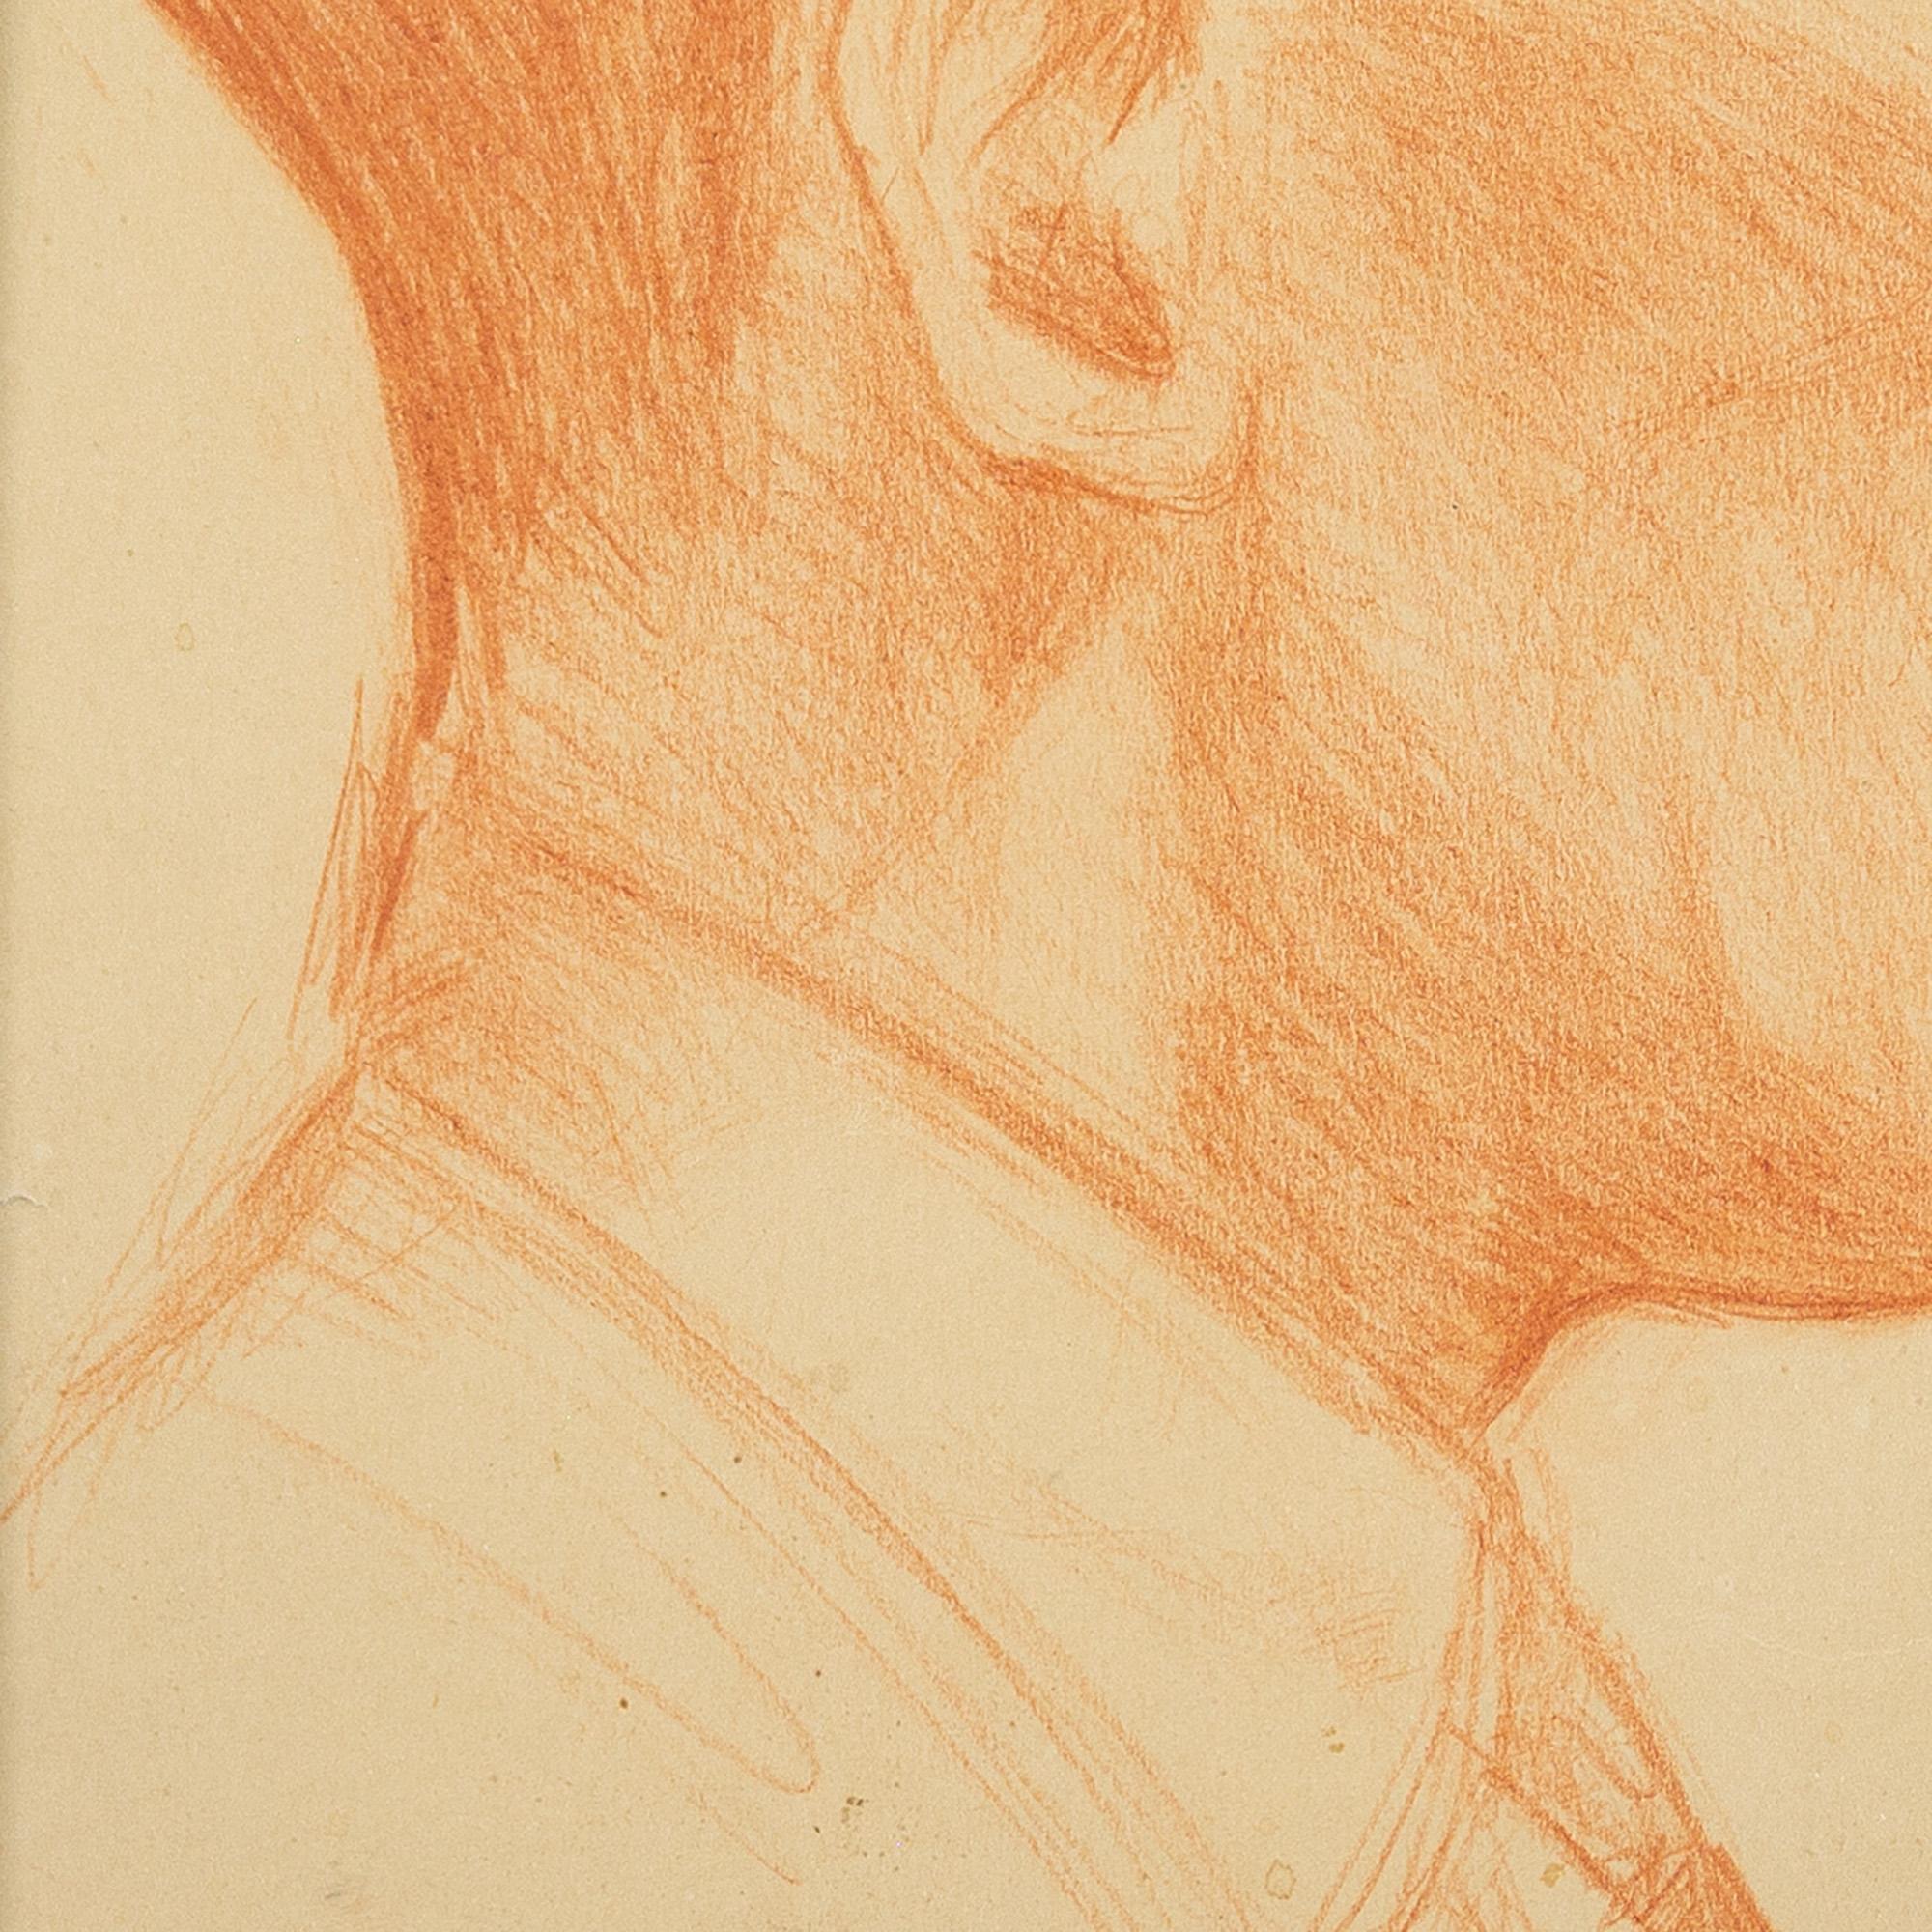 Roland Svensson, Portrait Study Of A Man, Drawing 7